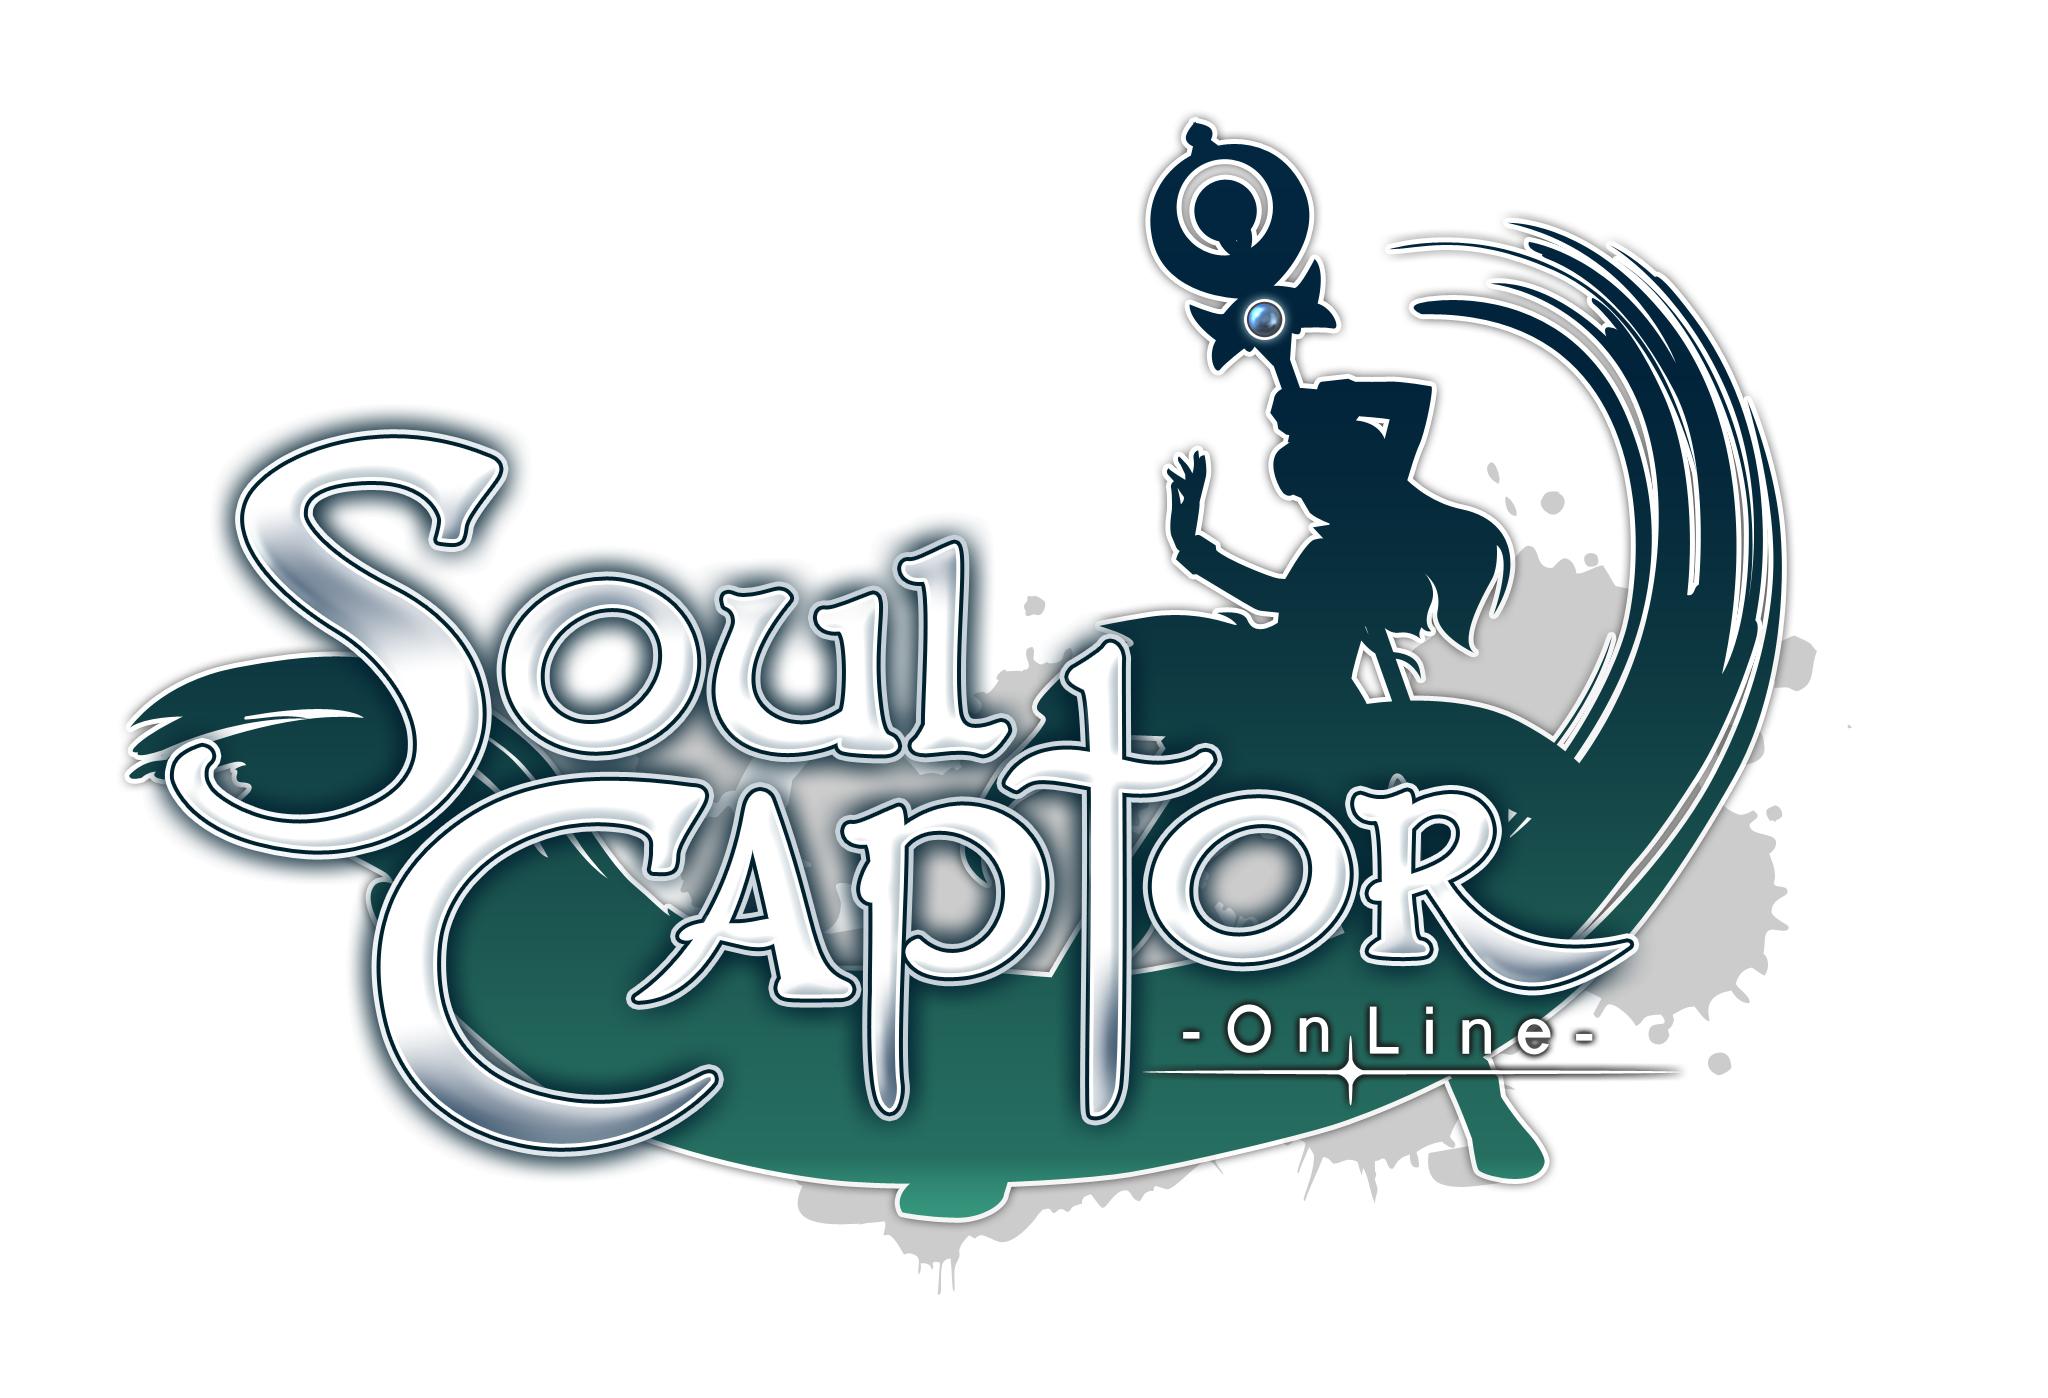 Soul Captor ソウルキャプター ファンタジー神話大作 Mmorpg Soul Captor 最新ゲーム 動画と独自の スピリットシステム を公開